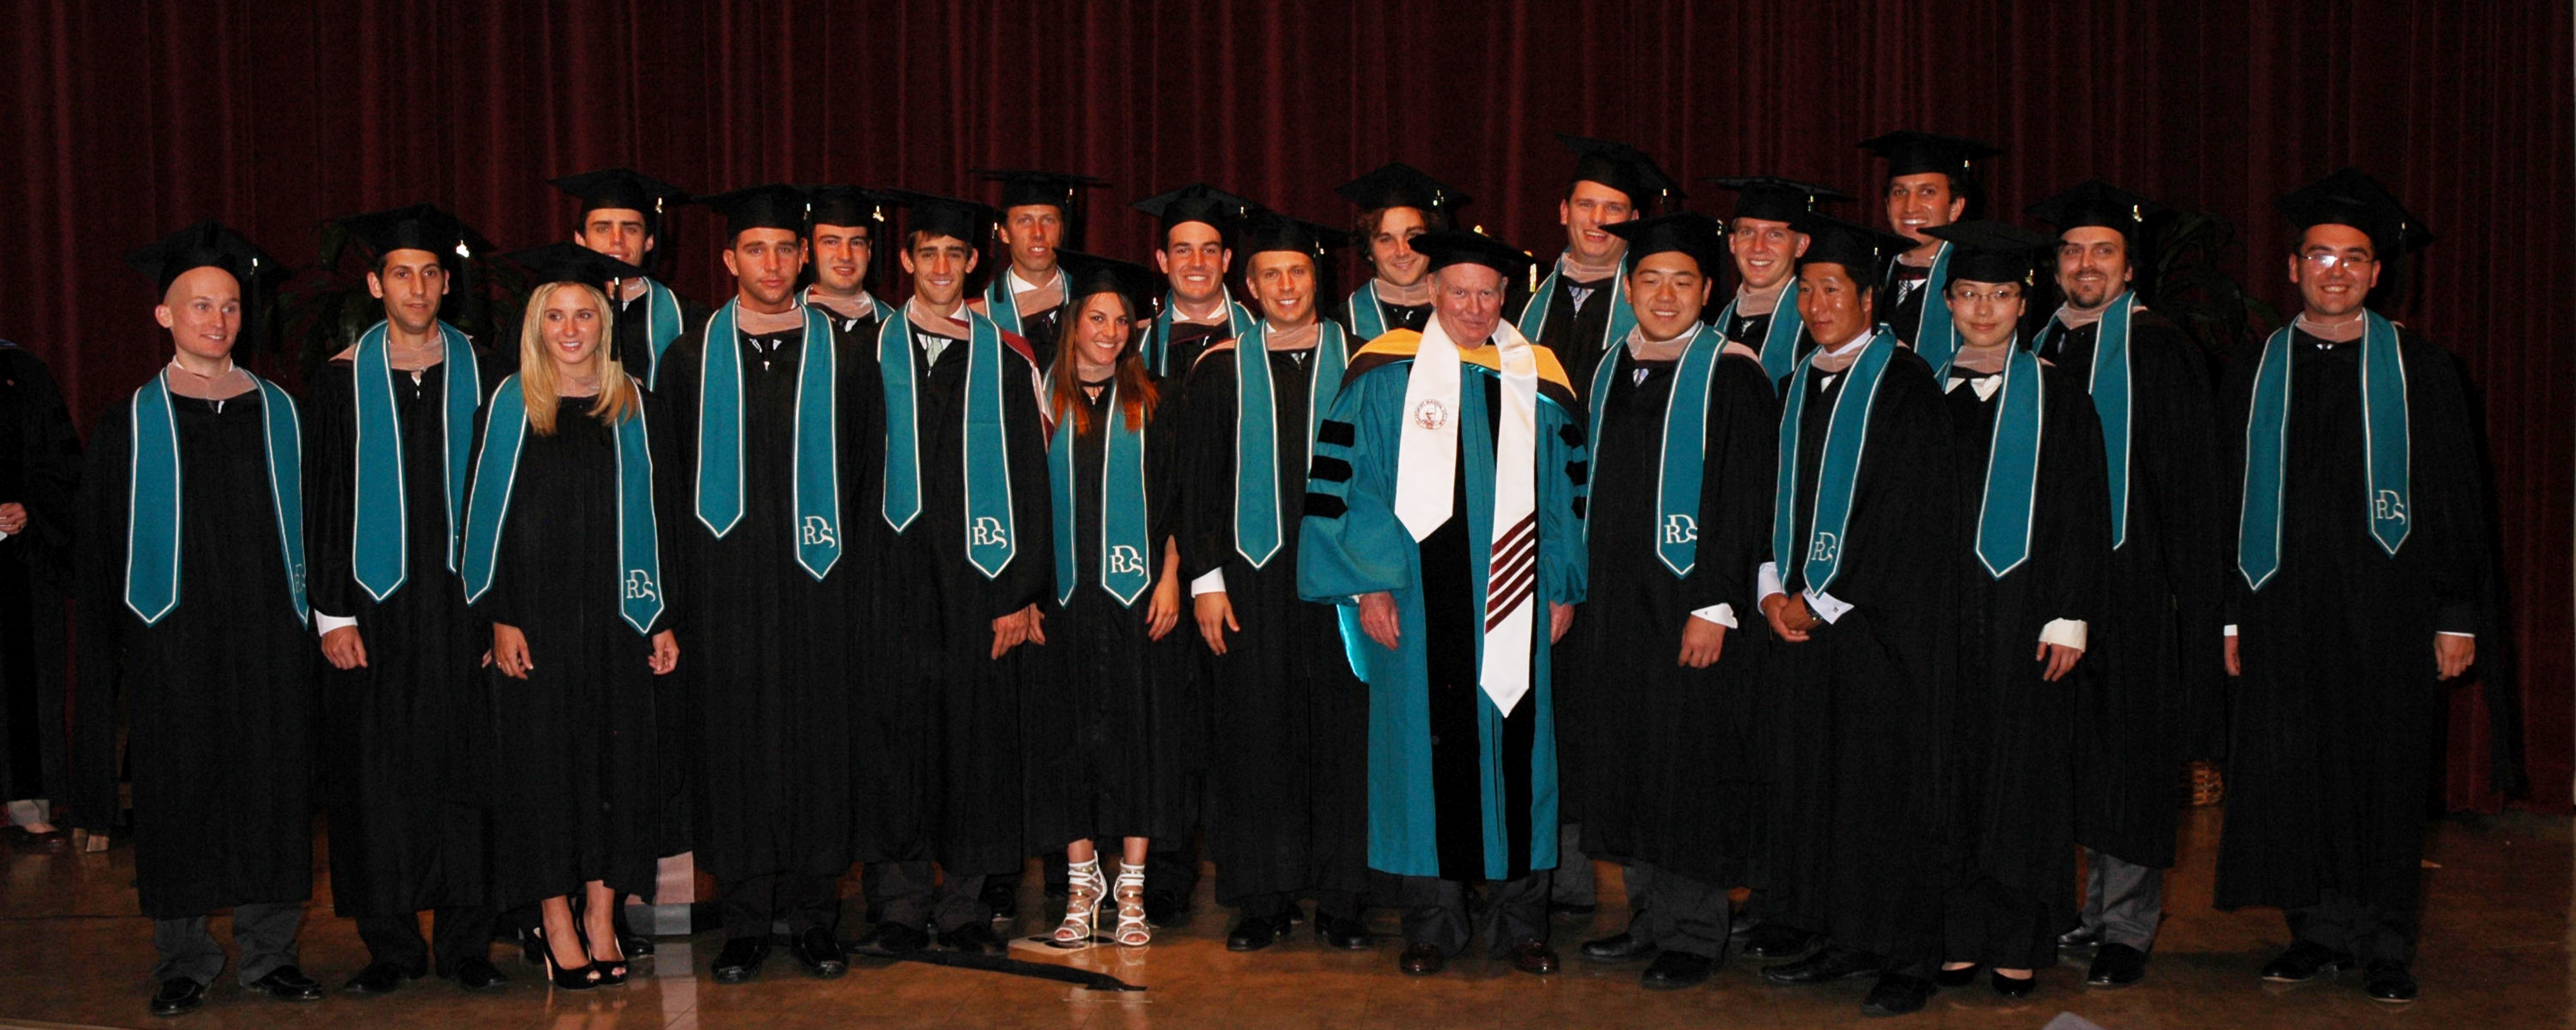 Class of 2010 graduates of Robert Day Scholars Program with Robert Day ’65 P’12, Board Chair Emeritus